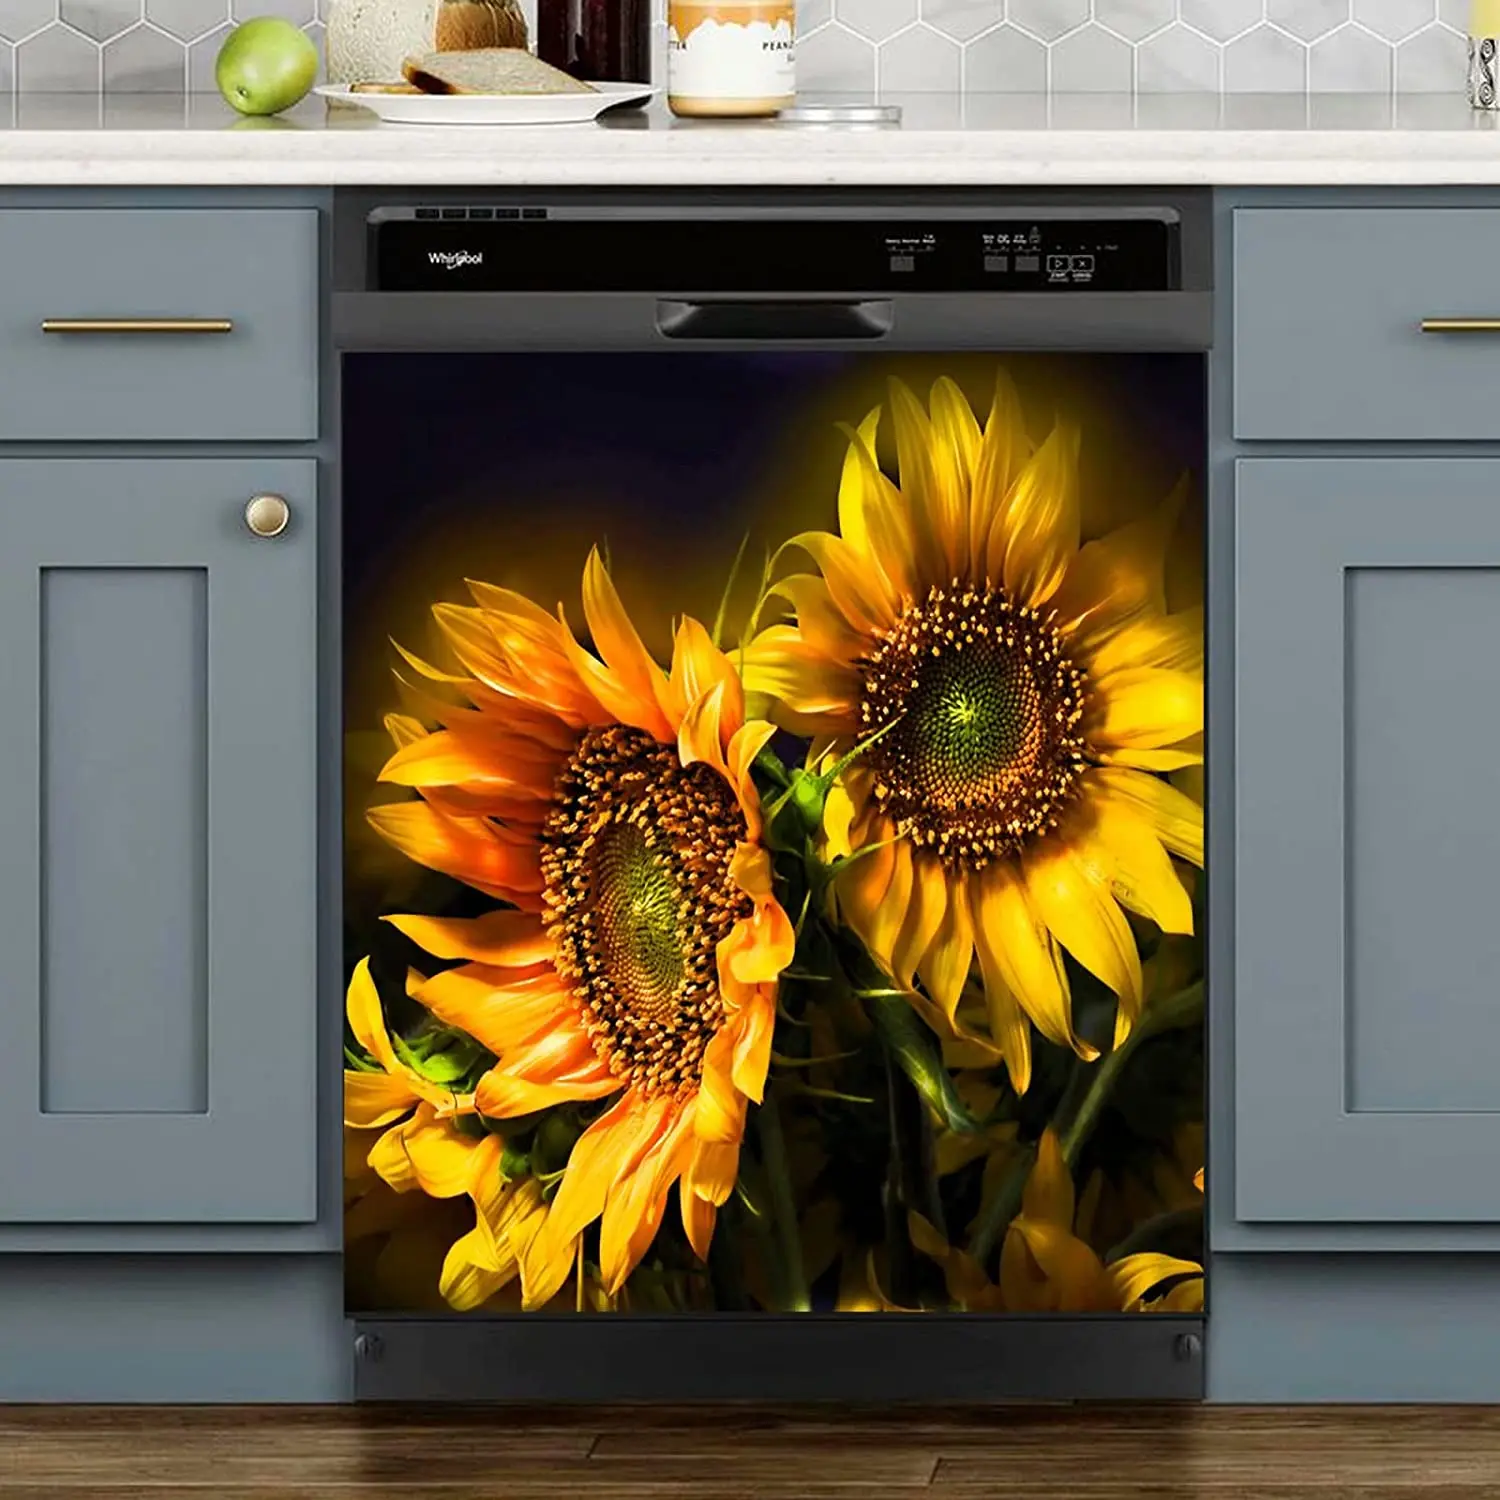 

Sunshine Sunsflower Dishwasher Magnet Cover,Home Kitchen Decoration,Sunflower Sticker Decorative Refrigerator,You Are My Sunshin